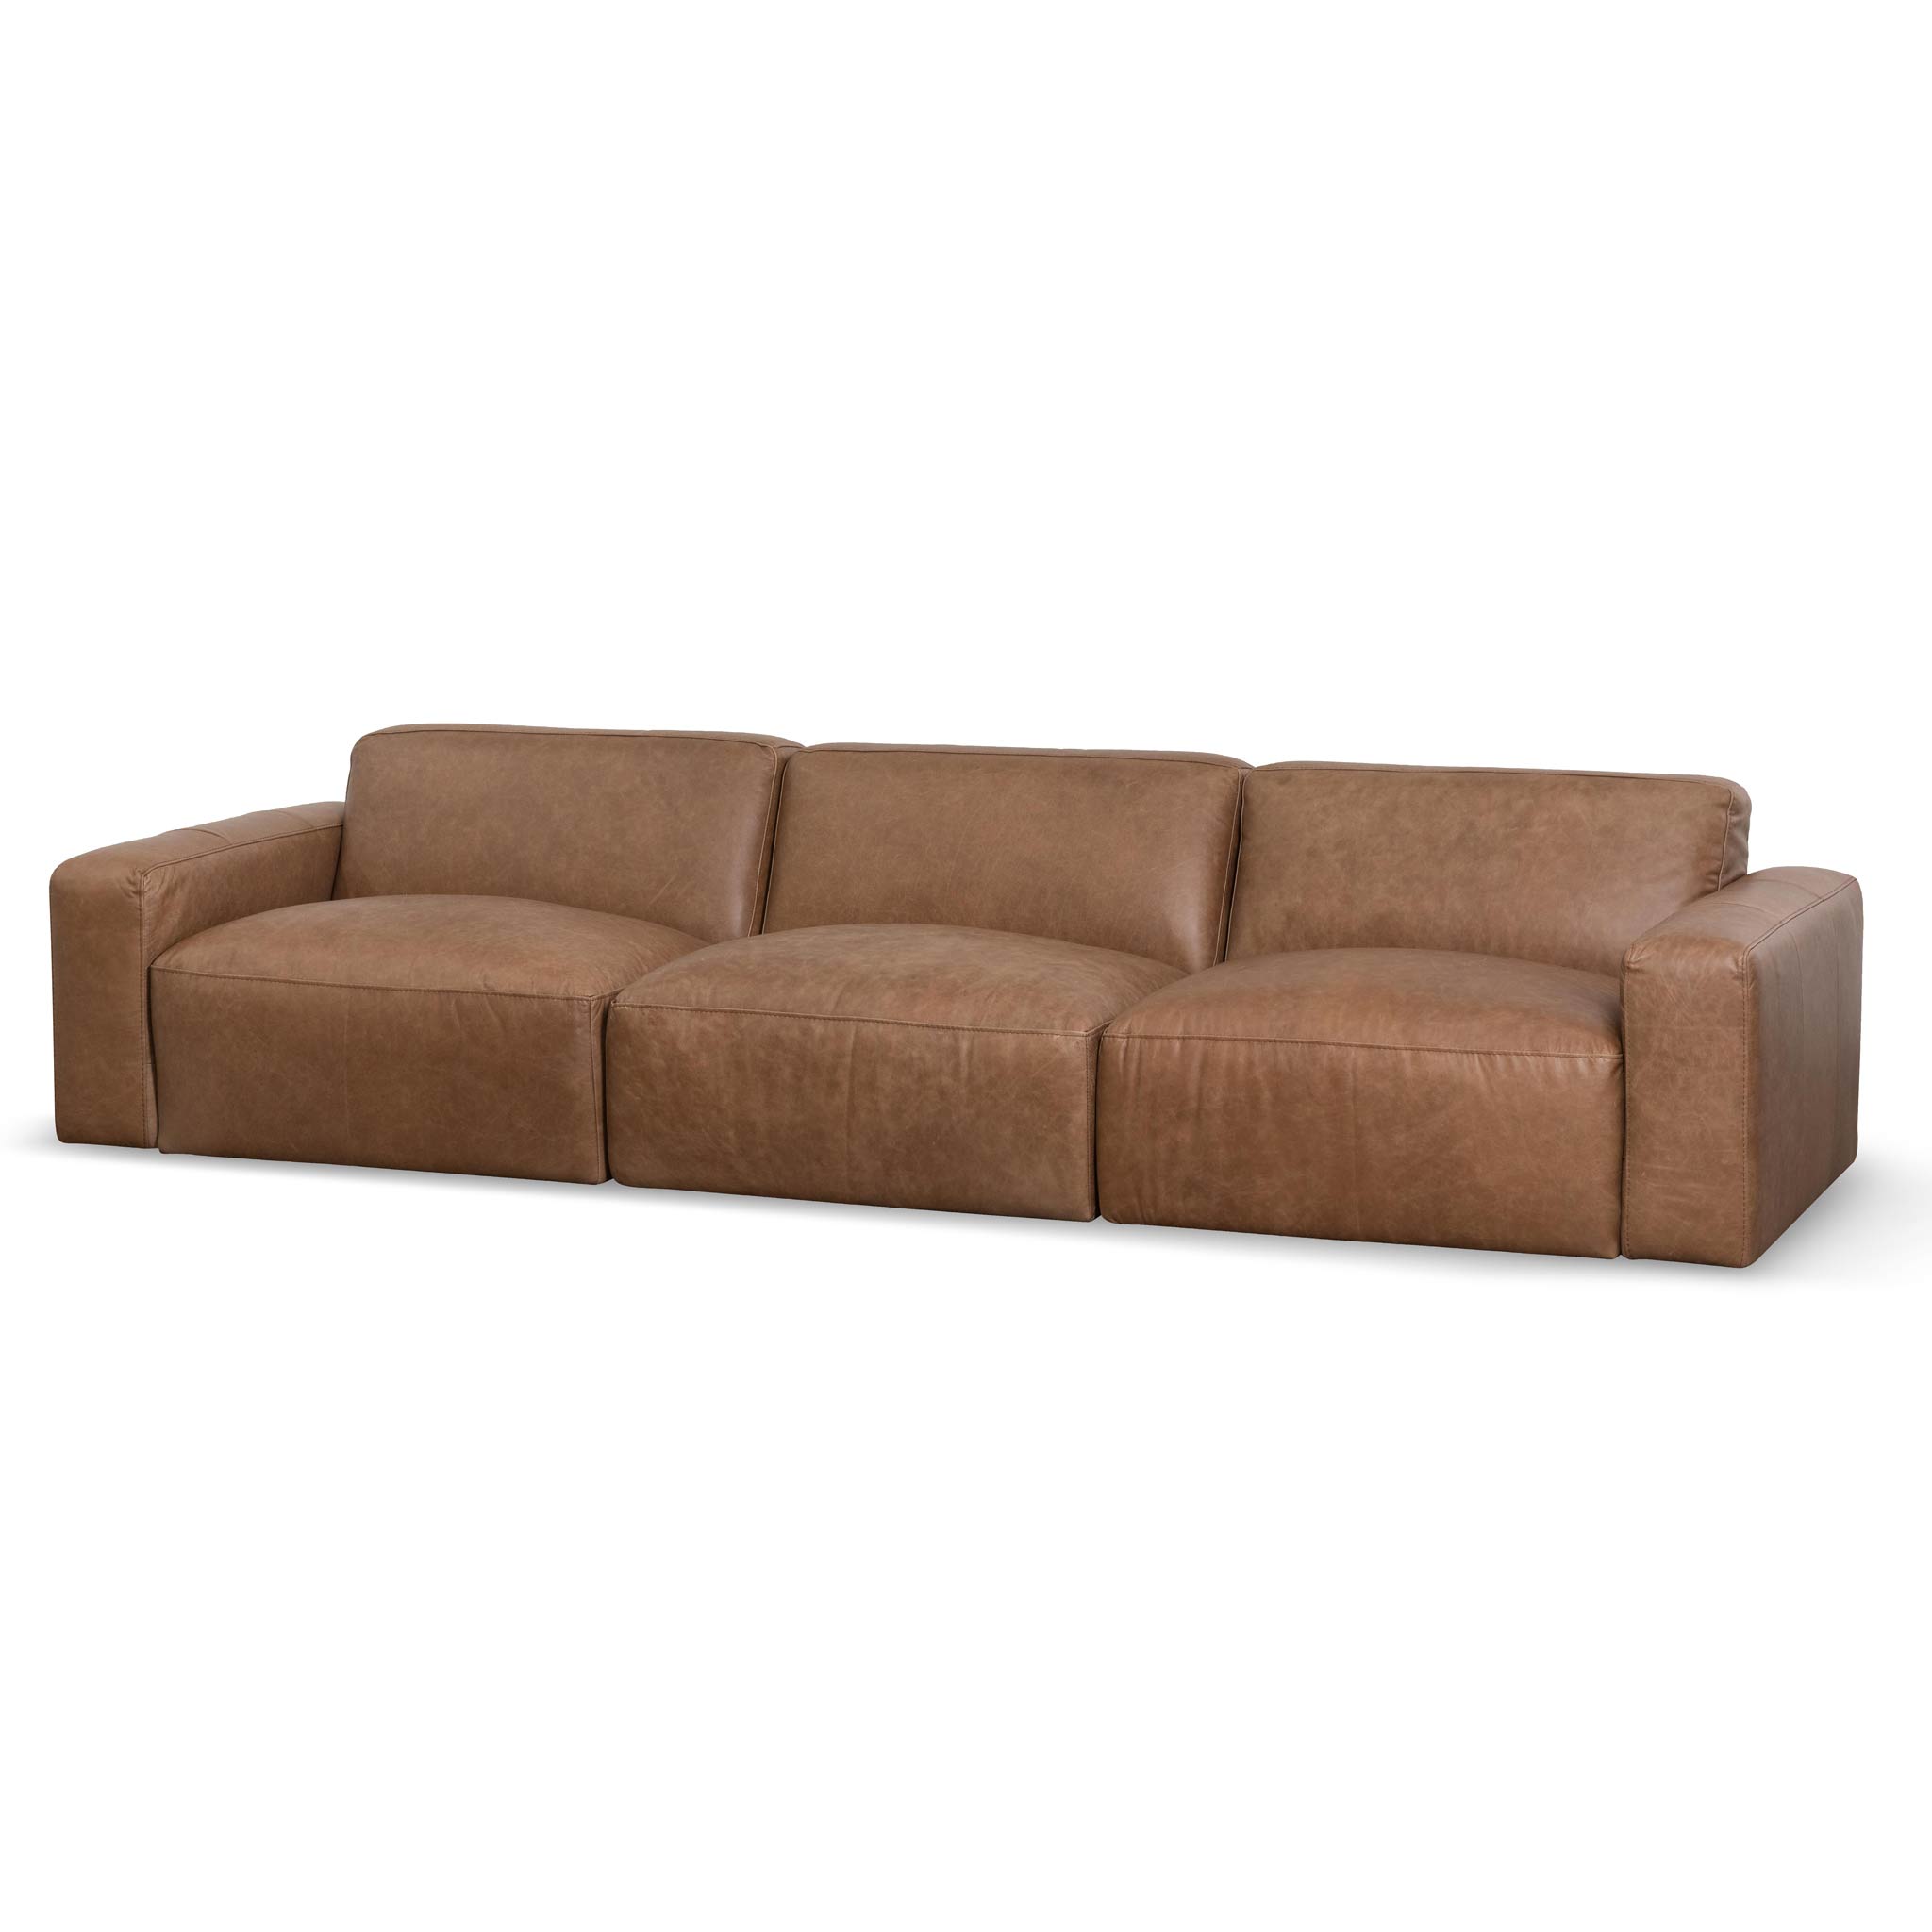 Matilda 3S Sofa - Saddle Brown Leather - Sofas